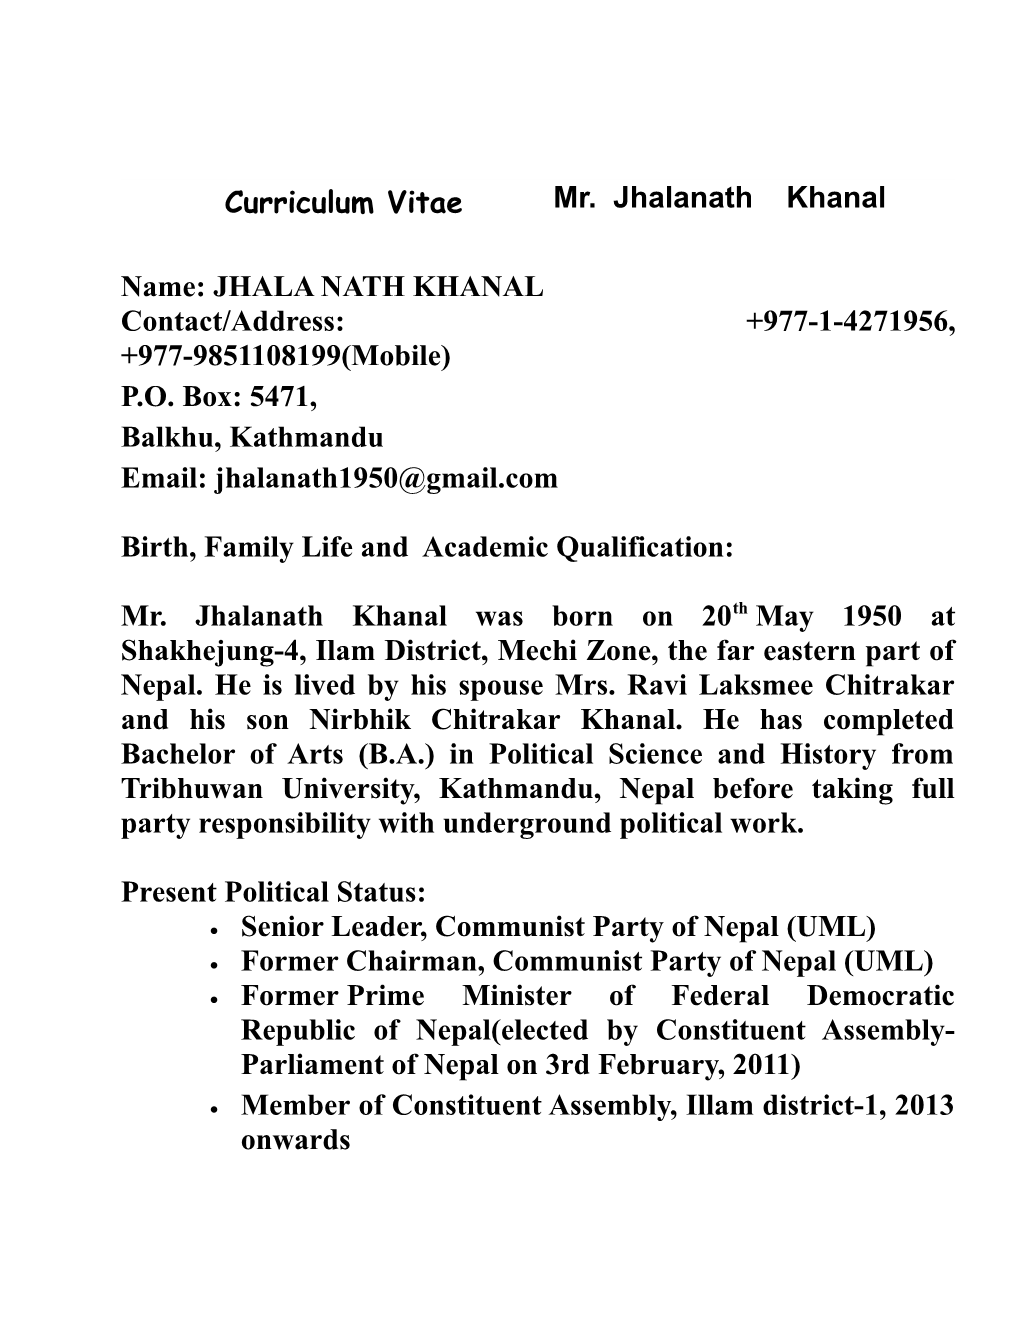 Senior Leader, Communist Party of Nepal (UML)